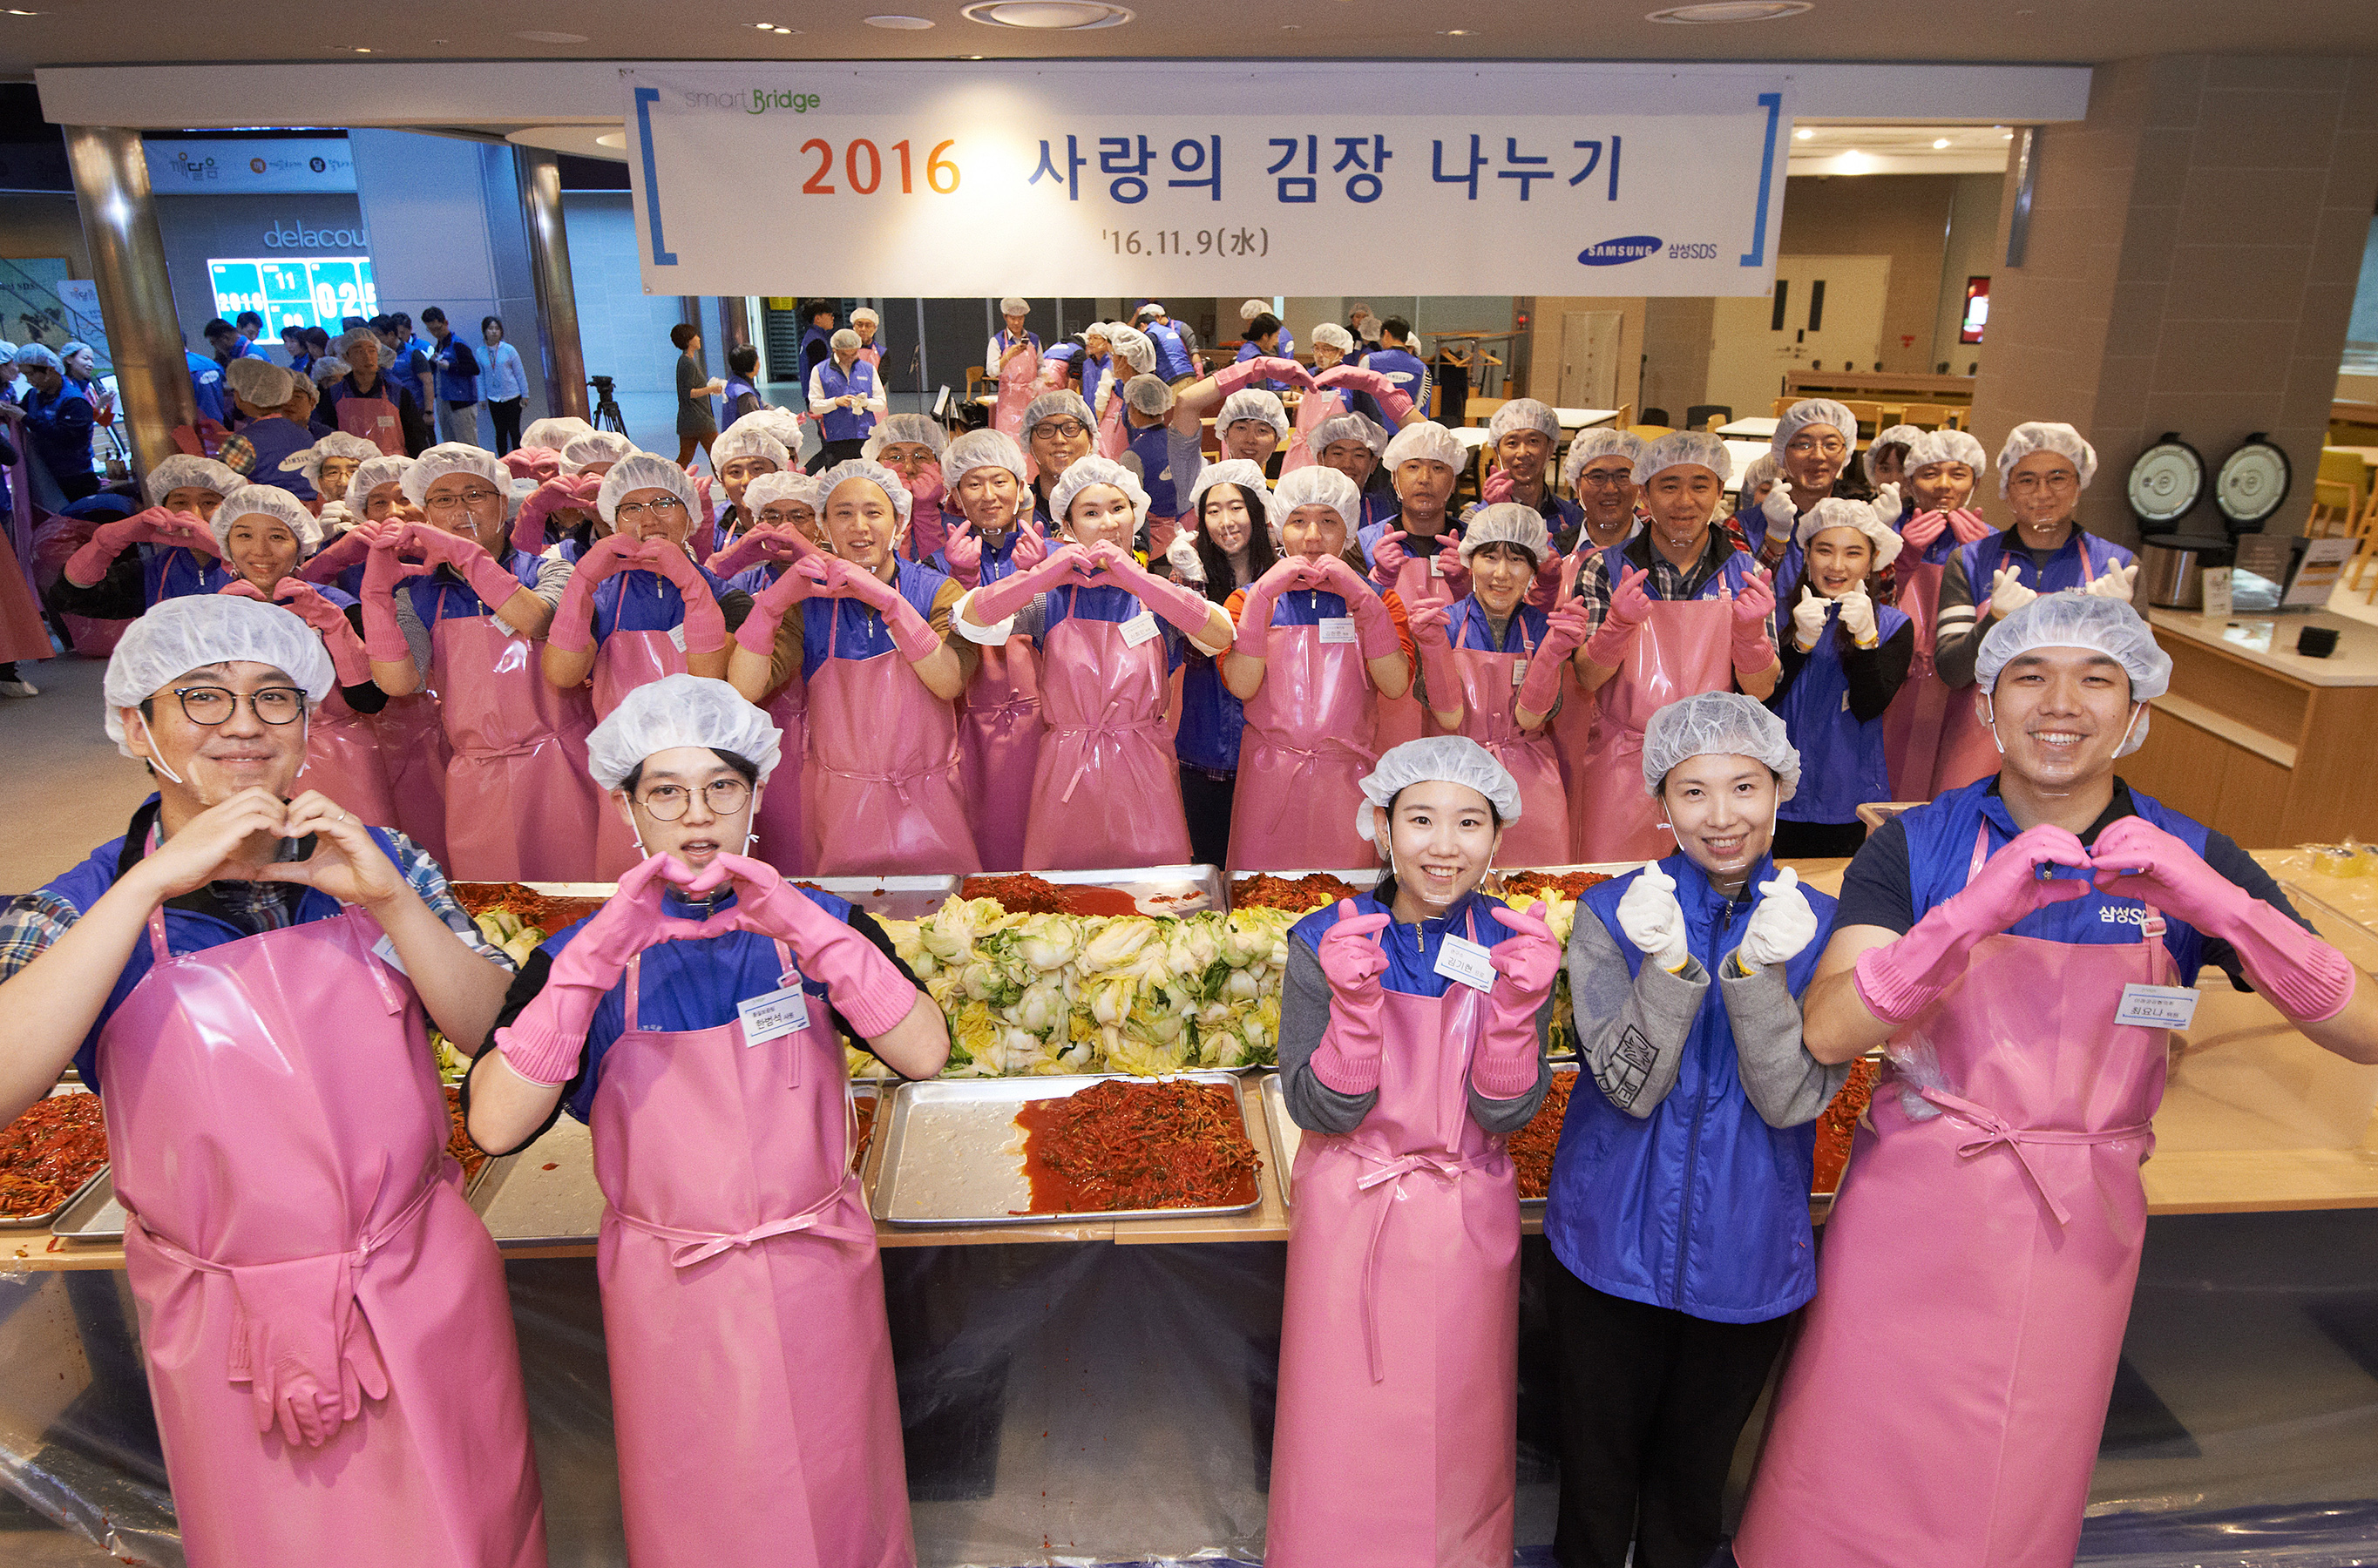 Kimchi Sharing Event of Love